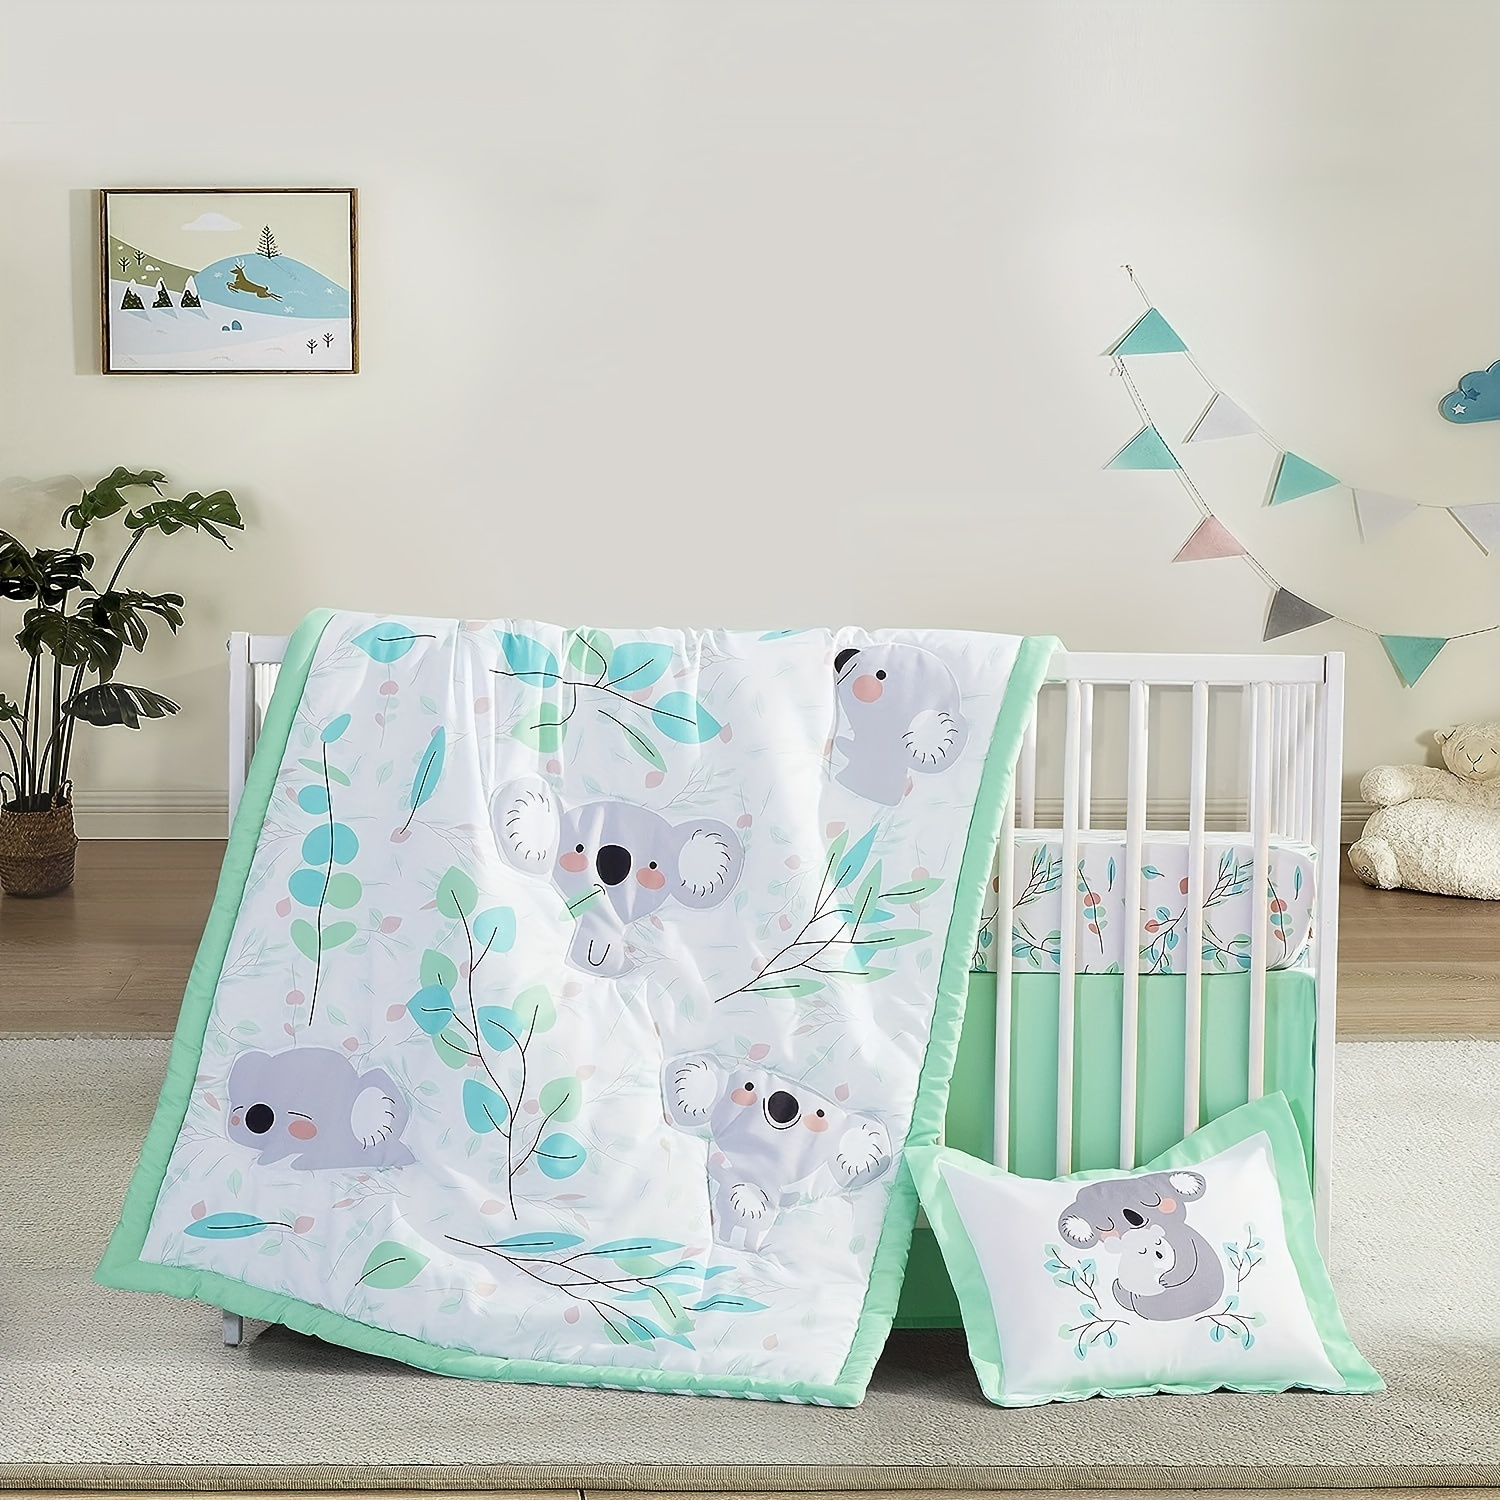 

4pcs/set Neutral Crib Bedding Set For Girls And Boys - Baby Crib Set Green Koala | Crib Sheet, Crib Quilt, Crib Skirt And Pillow Cover Included